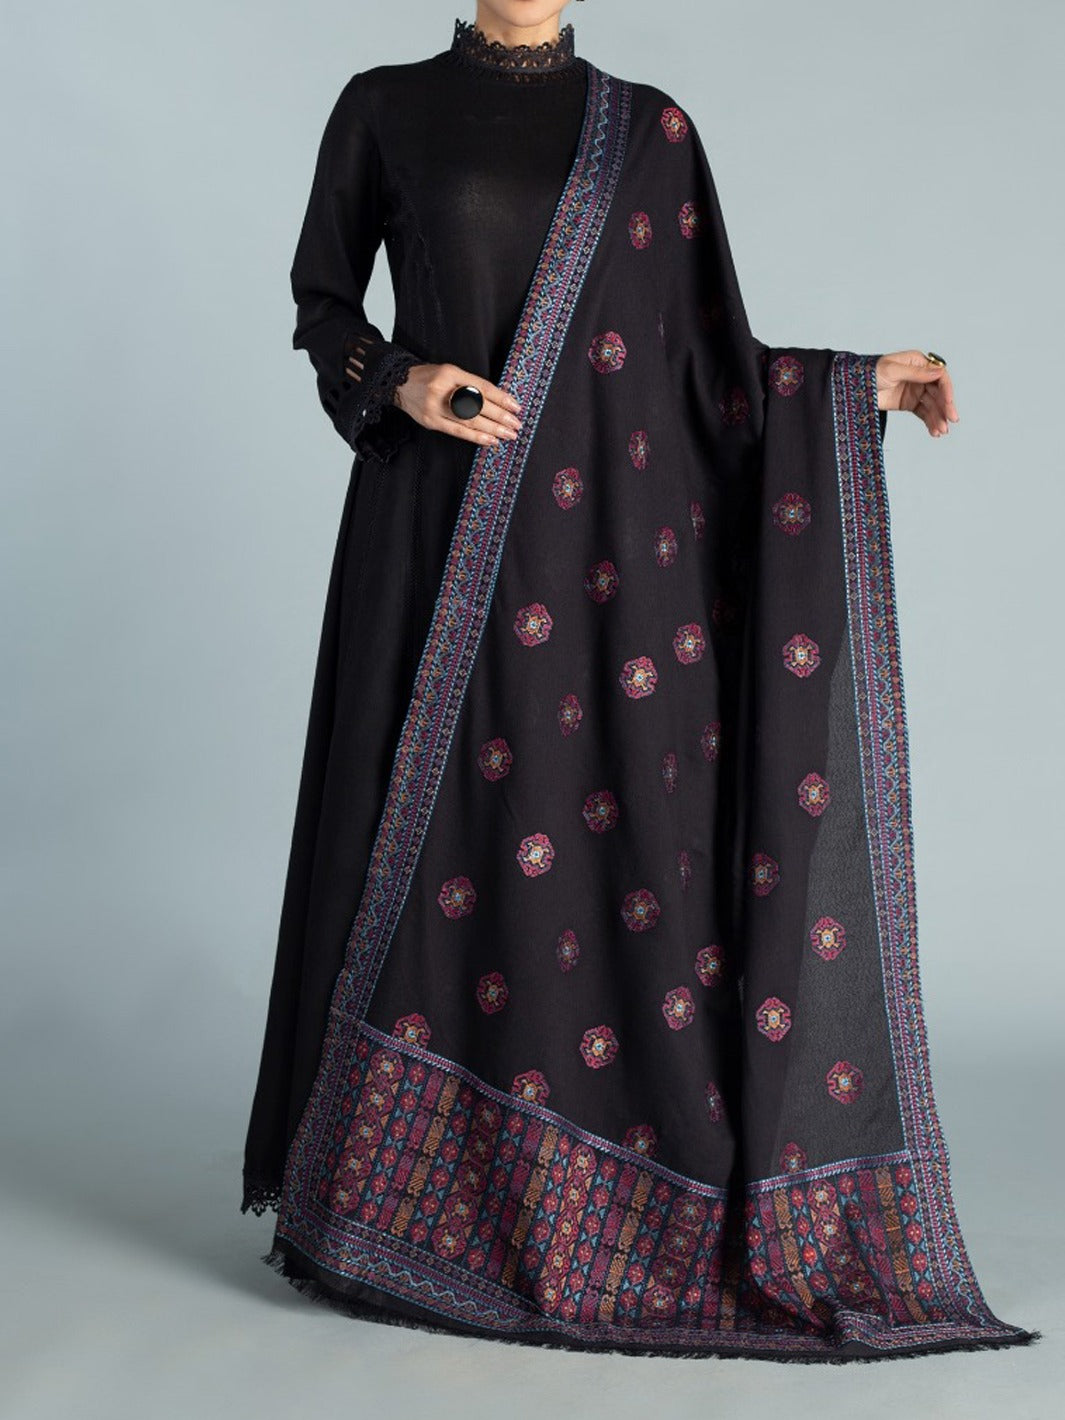 Sarinnah Premium D60-Luxury Formal Heavy Embroidered Karandi Shawl.